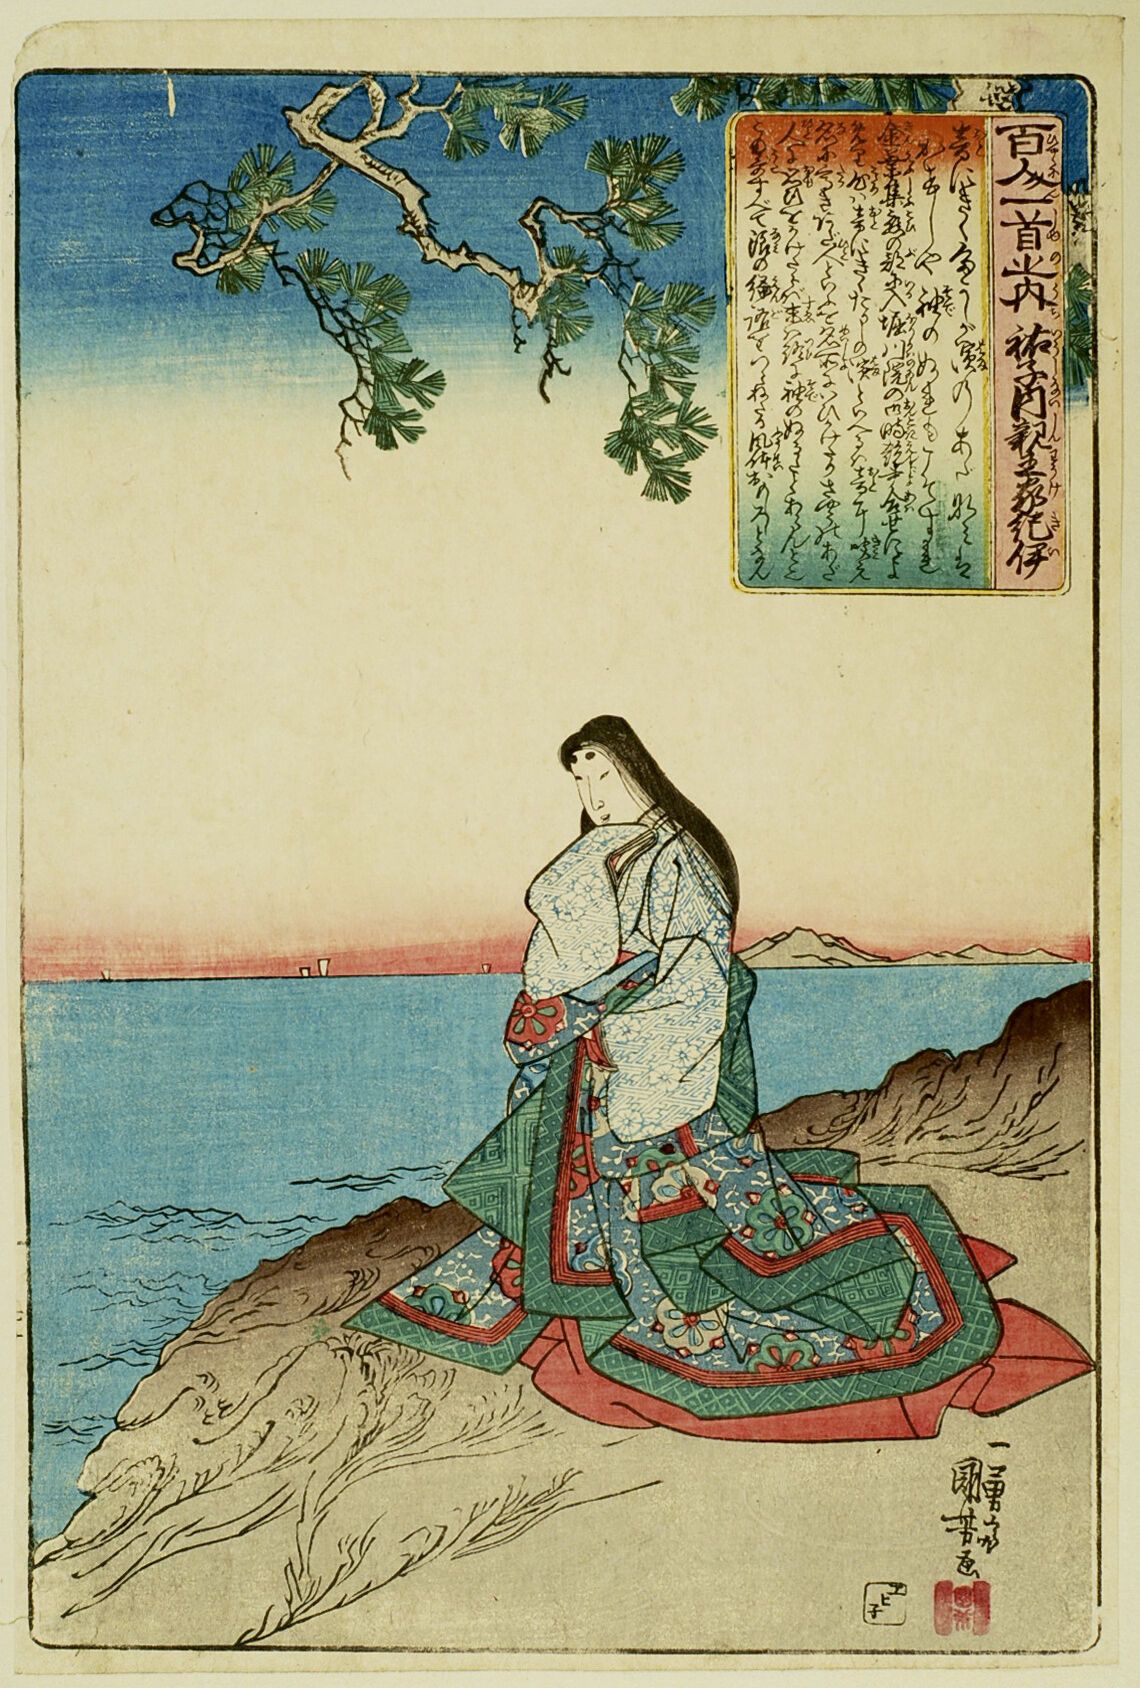 Null 宇都宫邦彦 (1797-1861)
百人一首》系列中的 "大板"（Oban tate-e），板块为Yûshi-naishinnôke（女诗人在悬崖上俯&hellip;